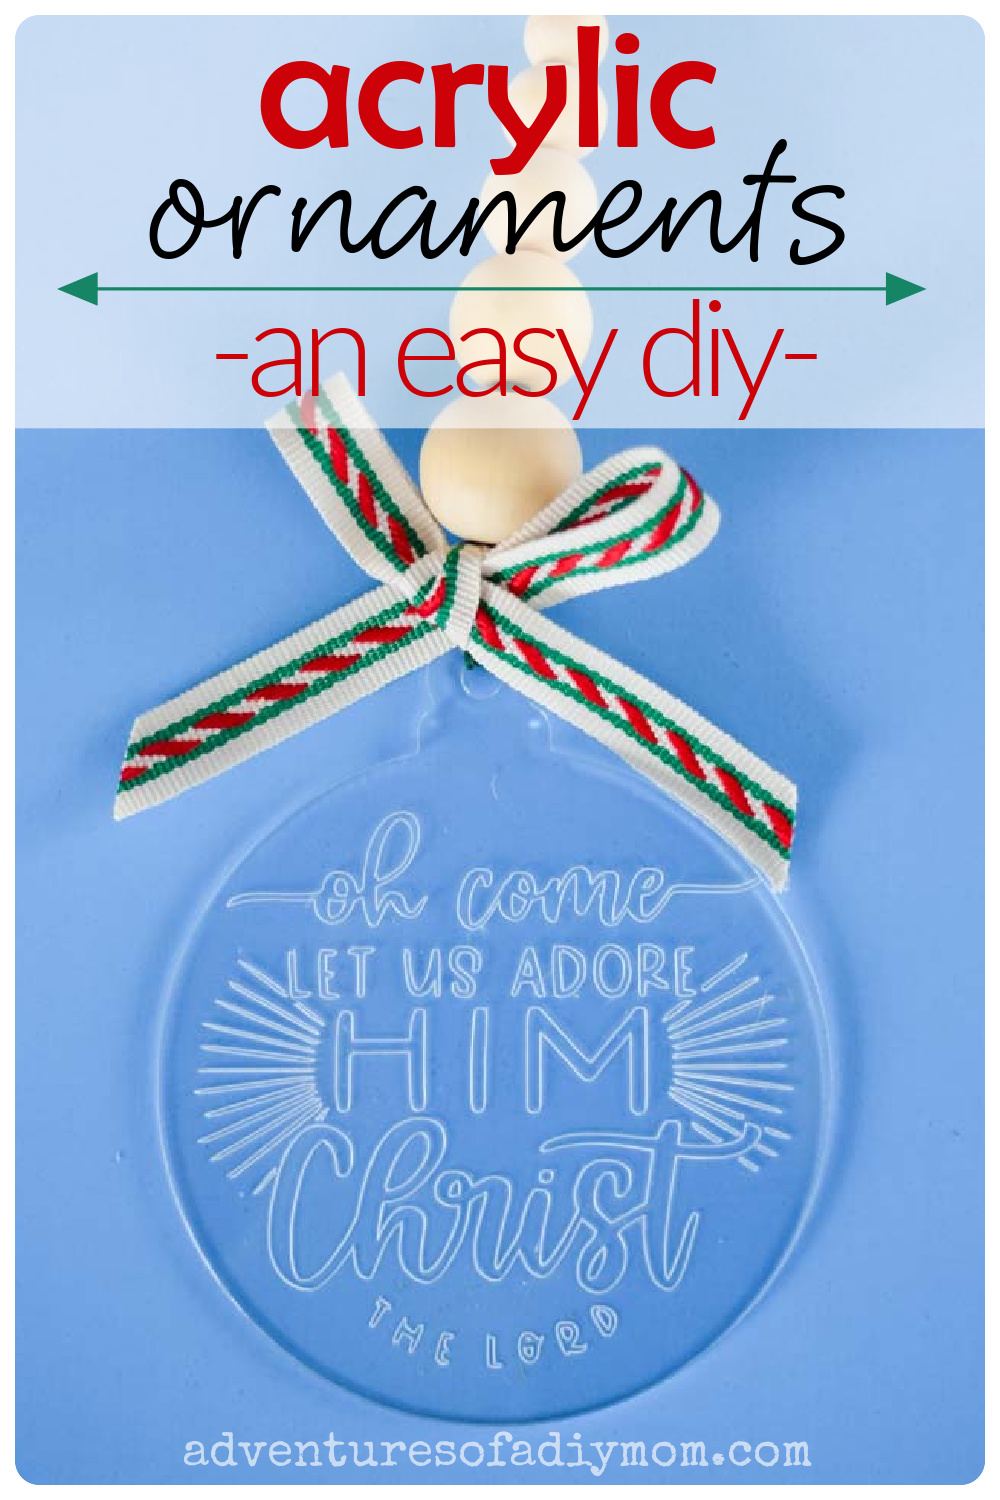 How To Make Custom DIY Acrylic Christmas Ornaments